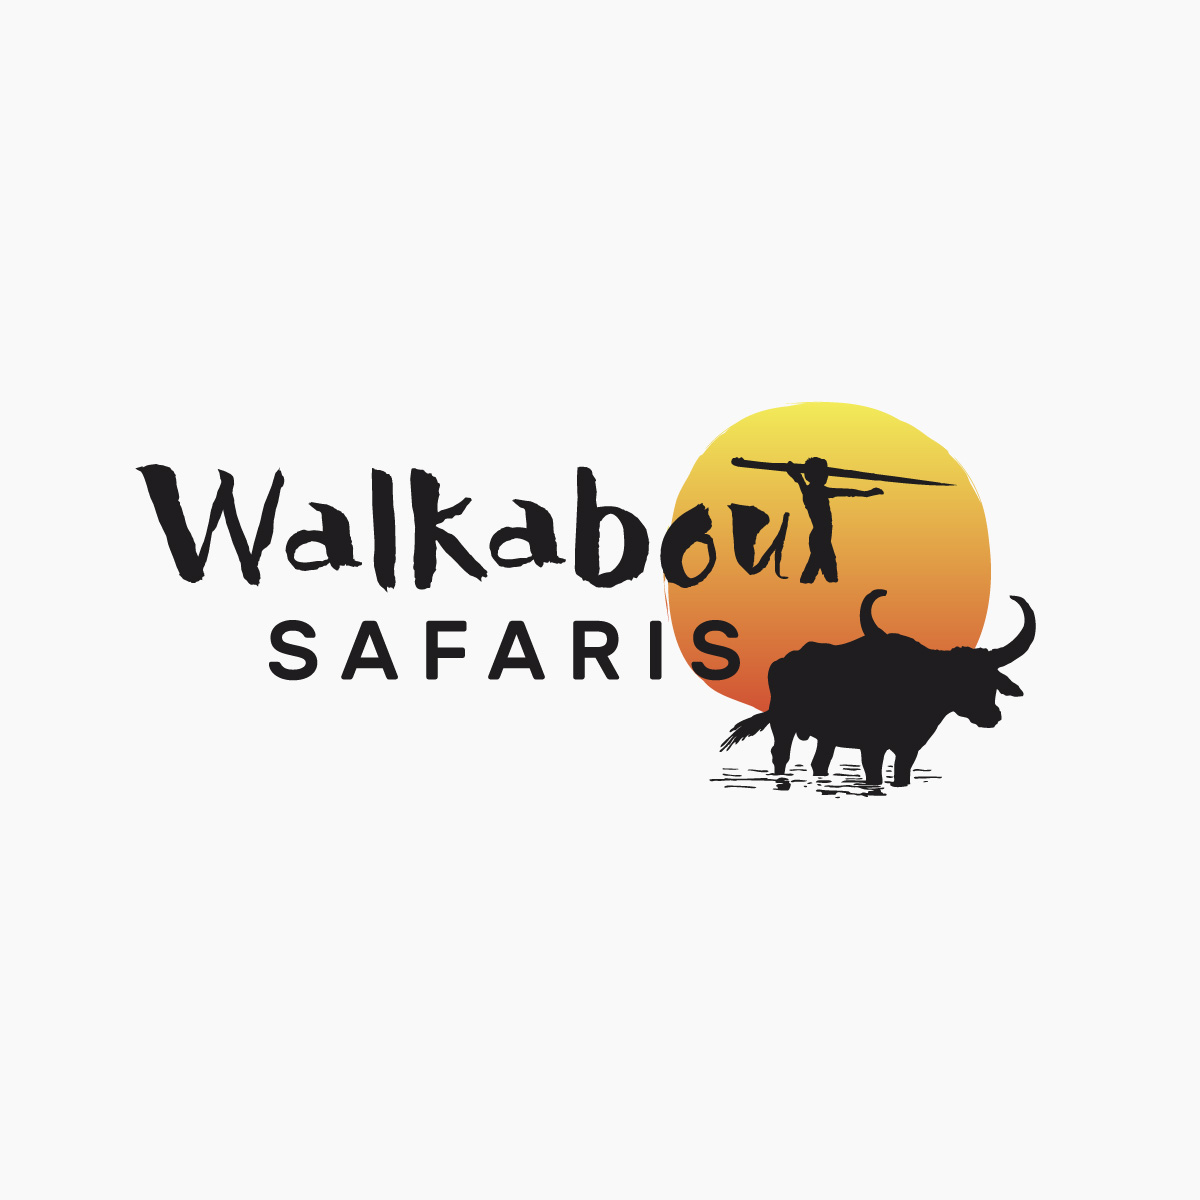 nohands-logo-design-walkabout-safaris